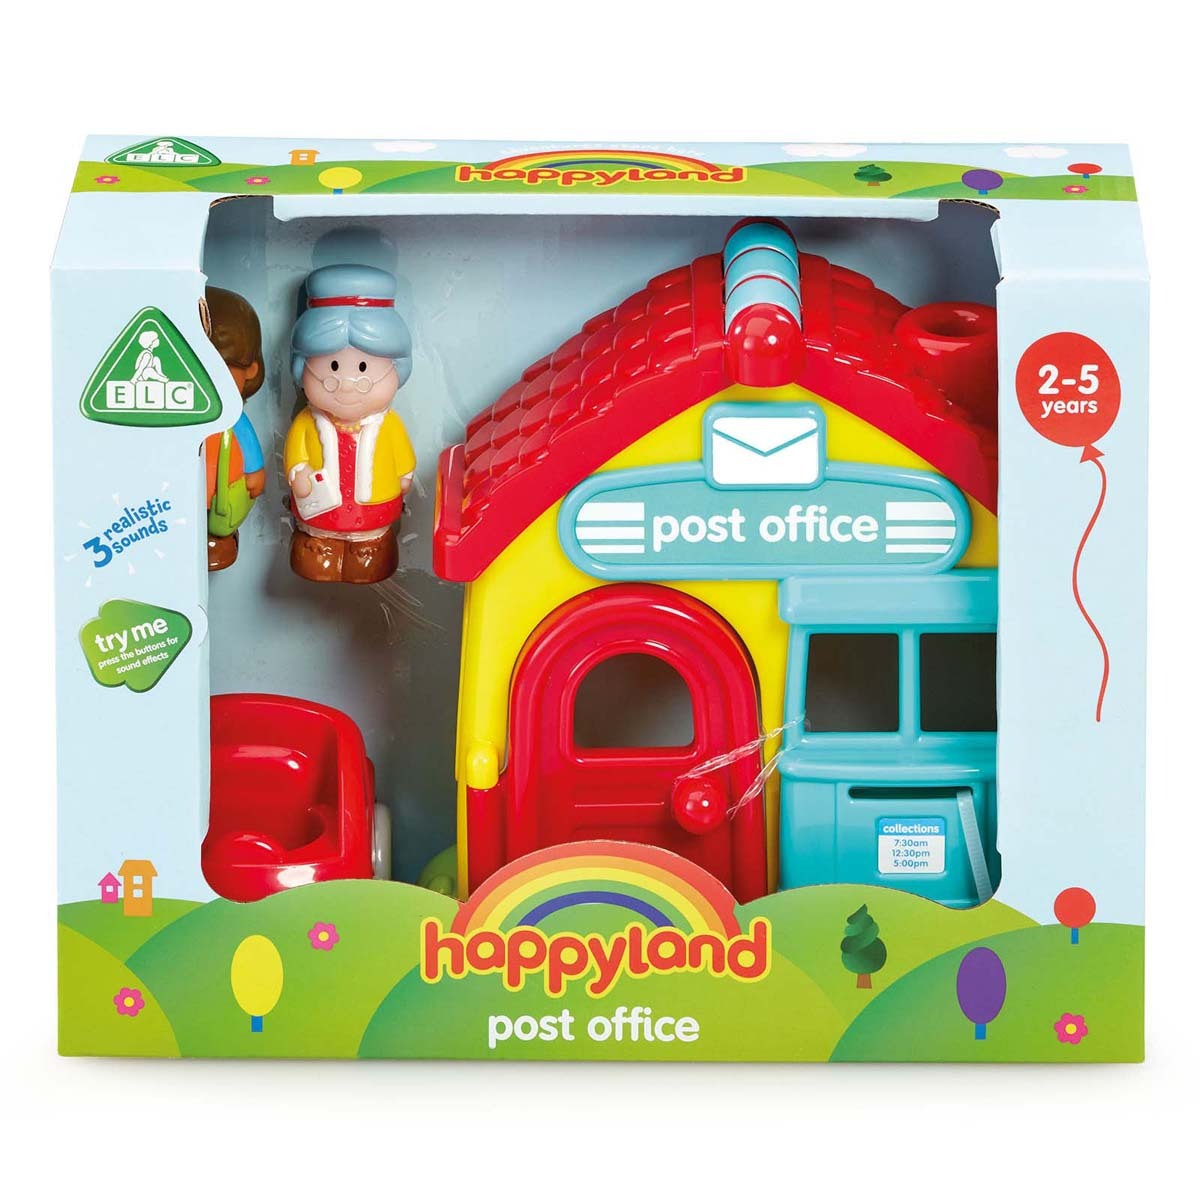 Happyland Post Office Playset